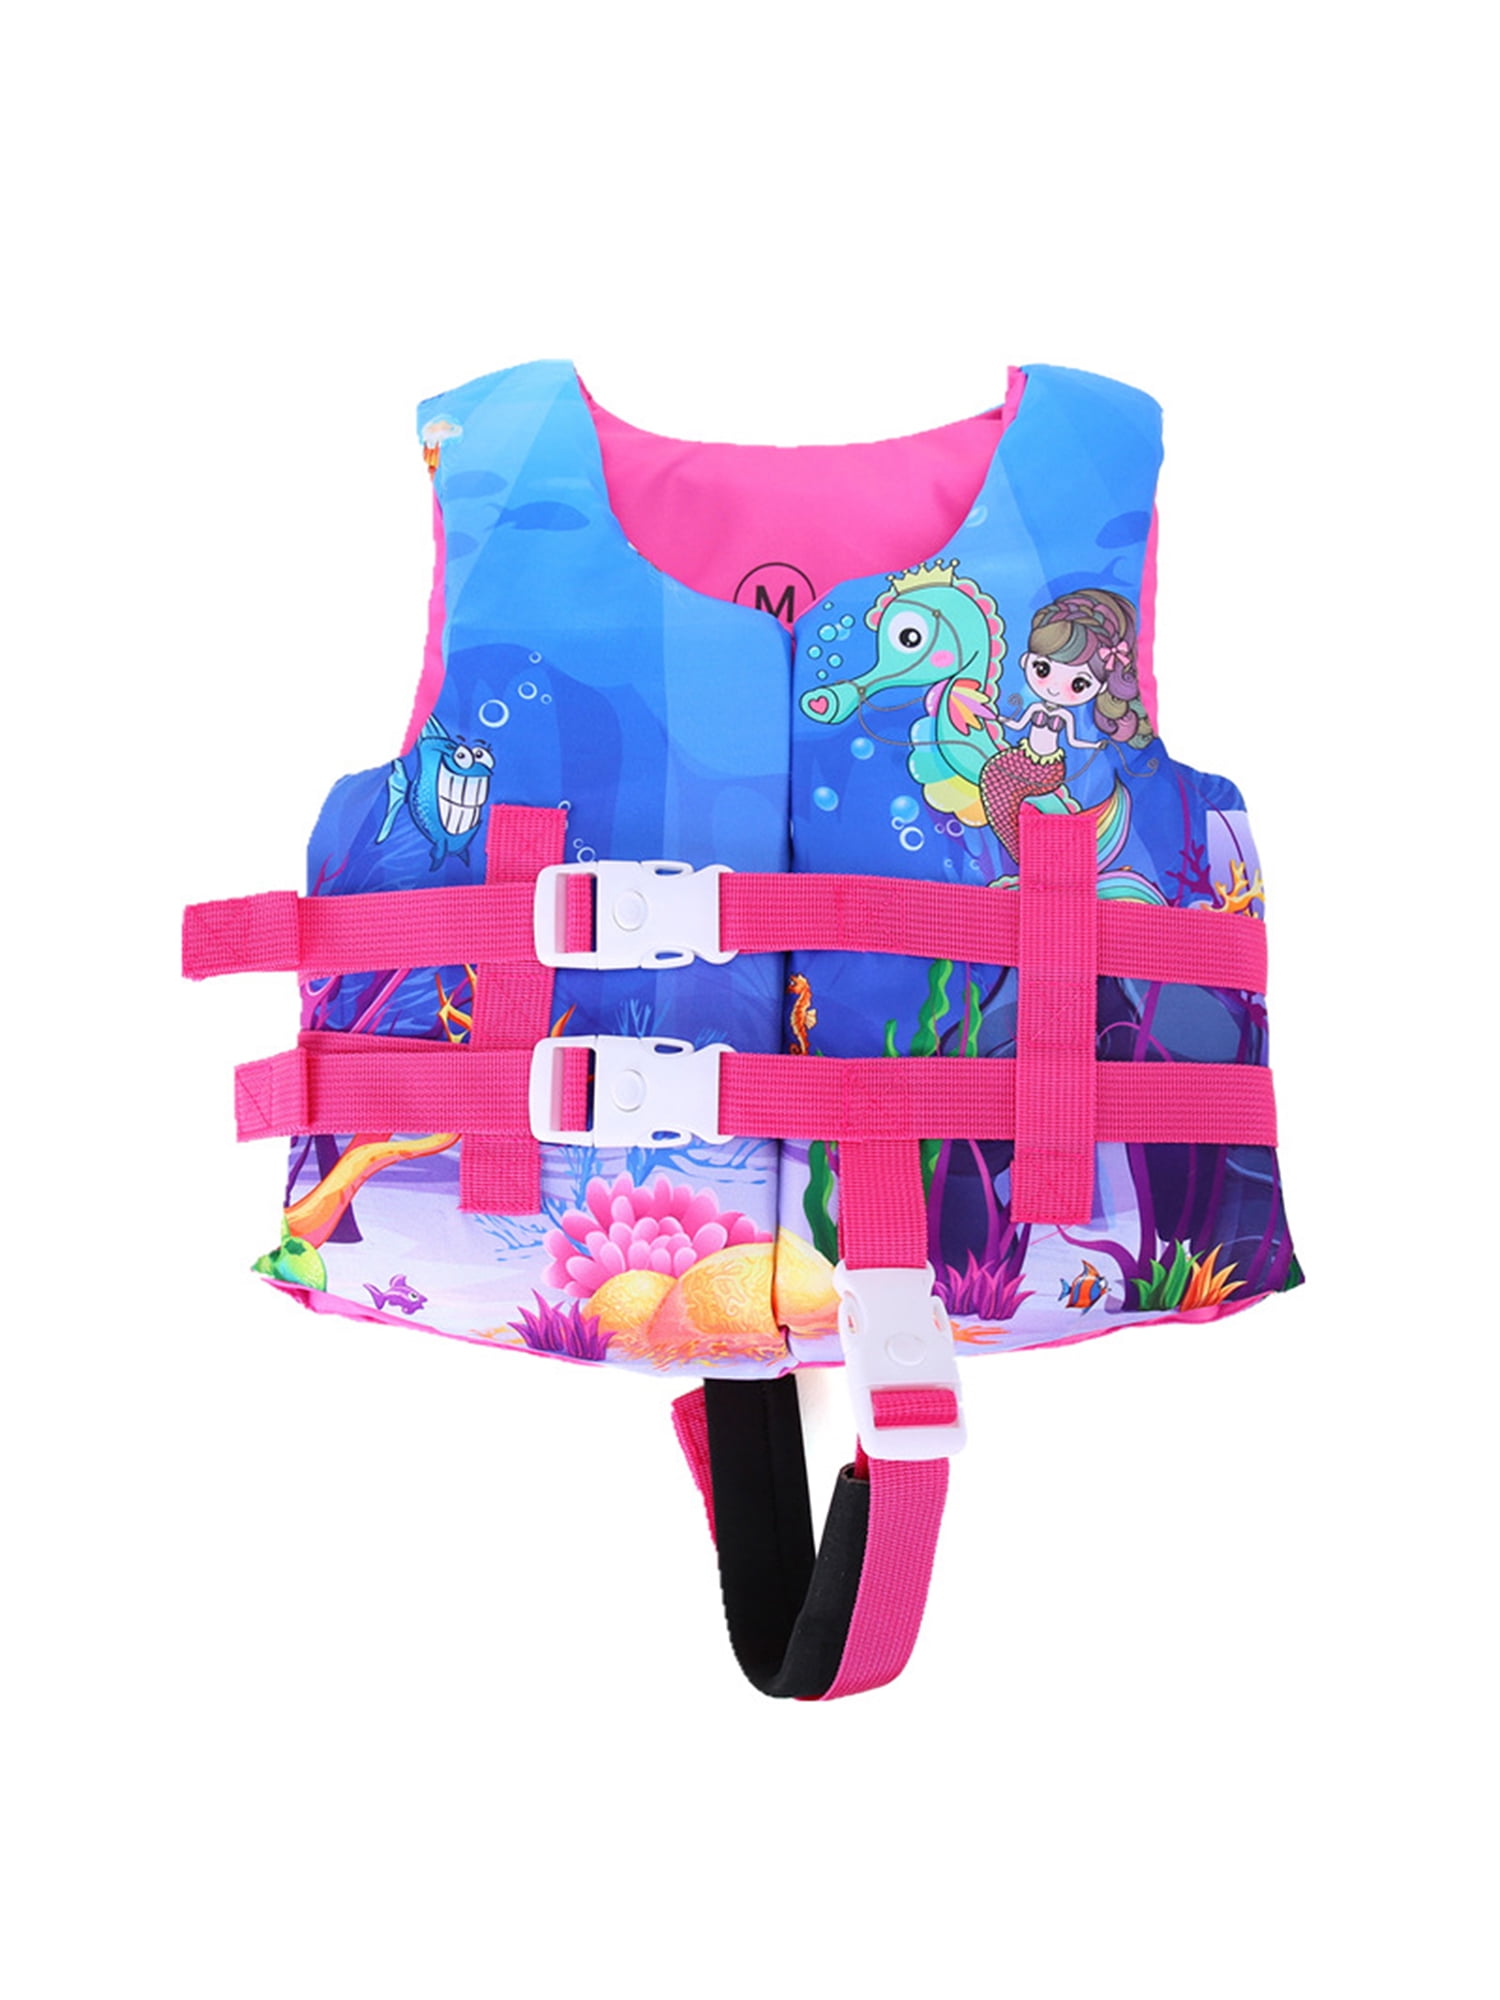 Details about   Kids children Life Jacket Vest Swim Float Floating Kayak Buoyancy Aid Watersport 